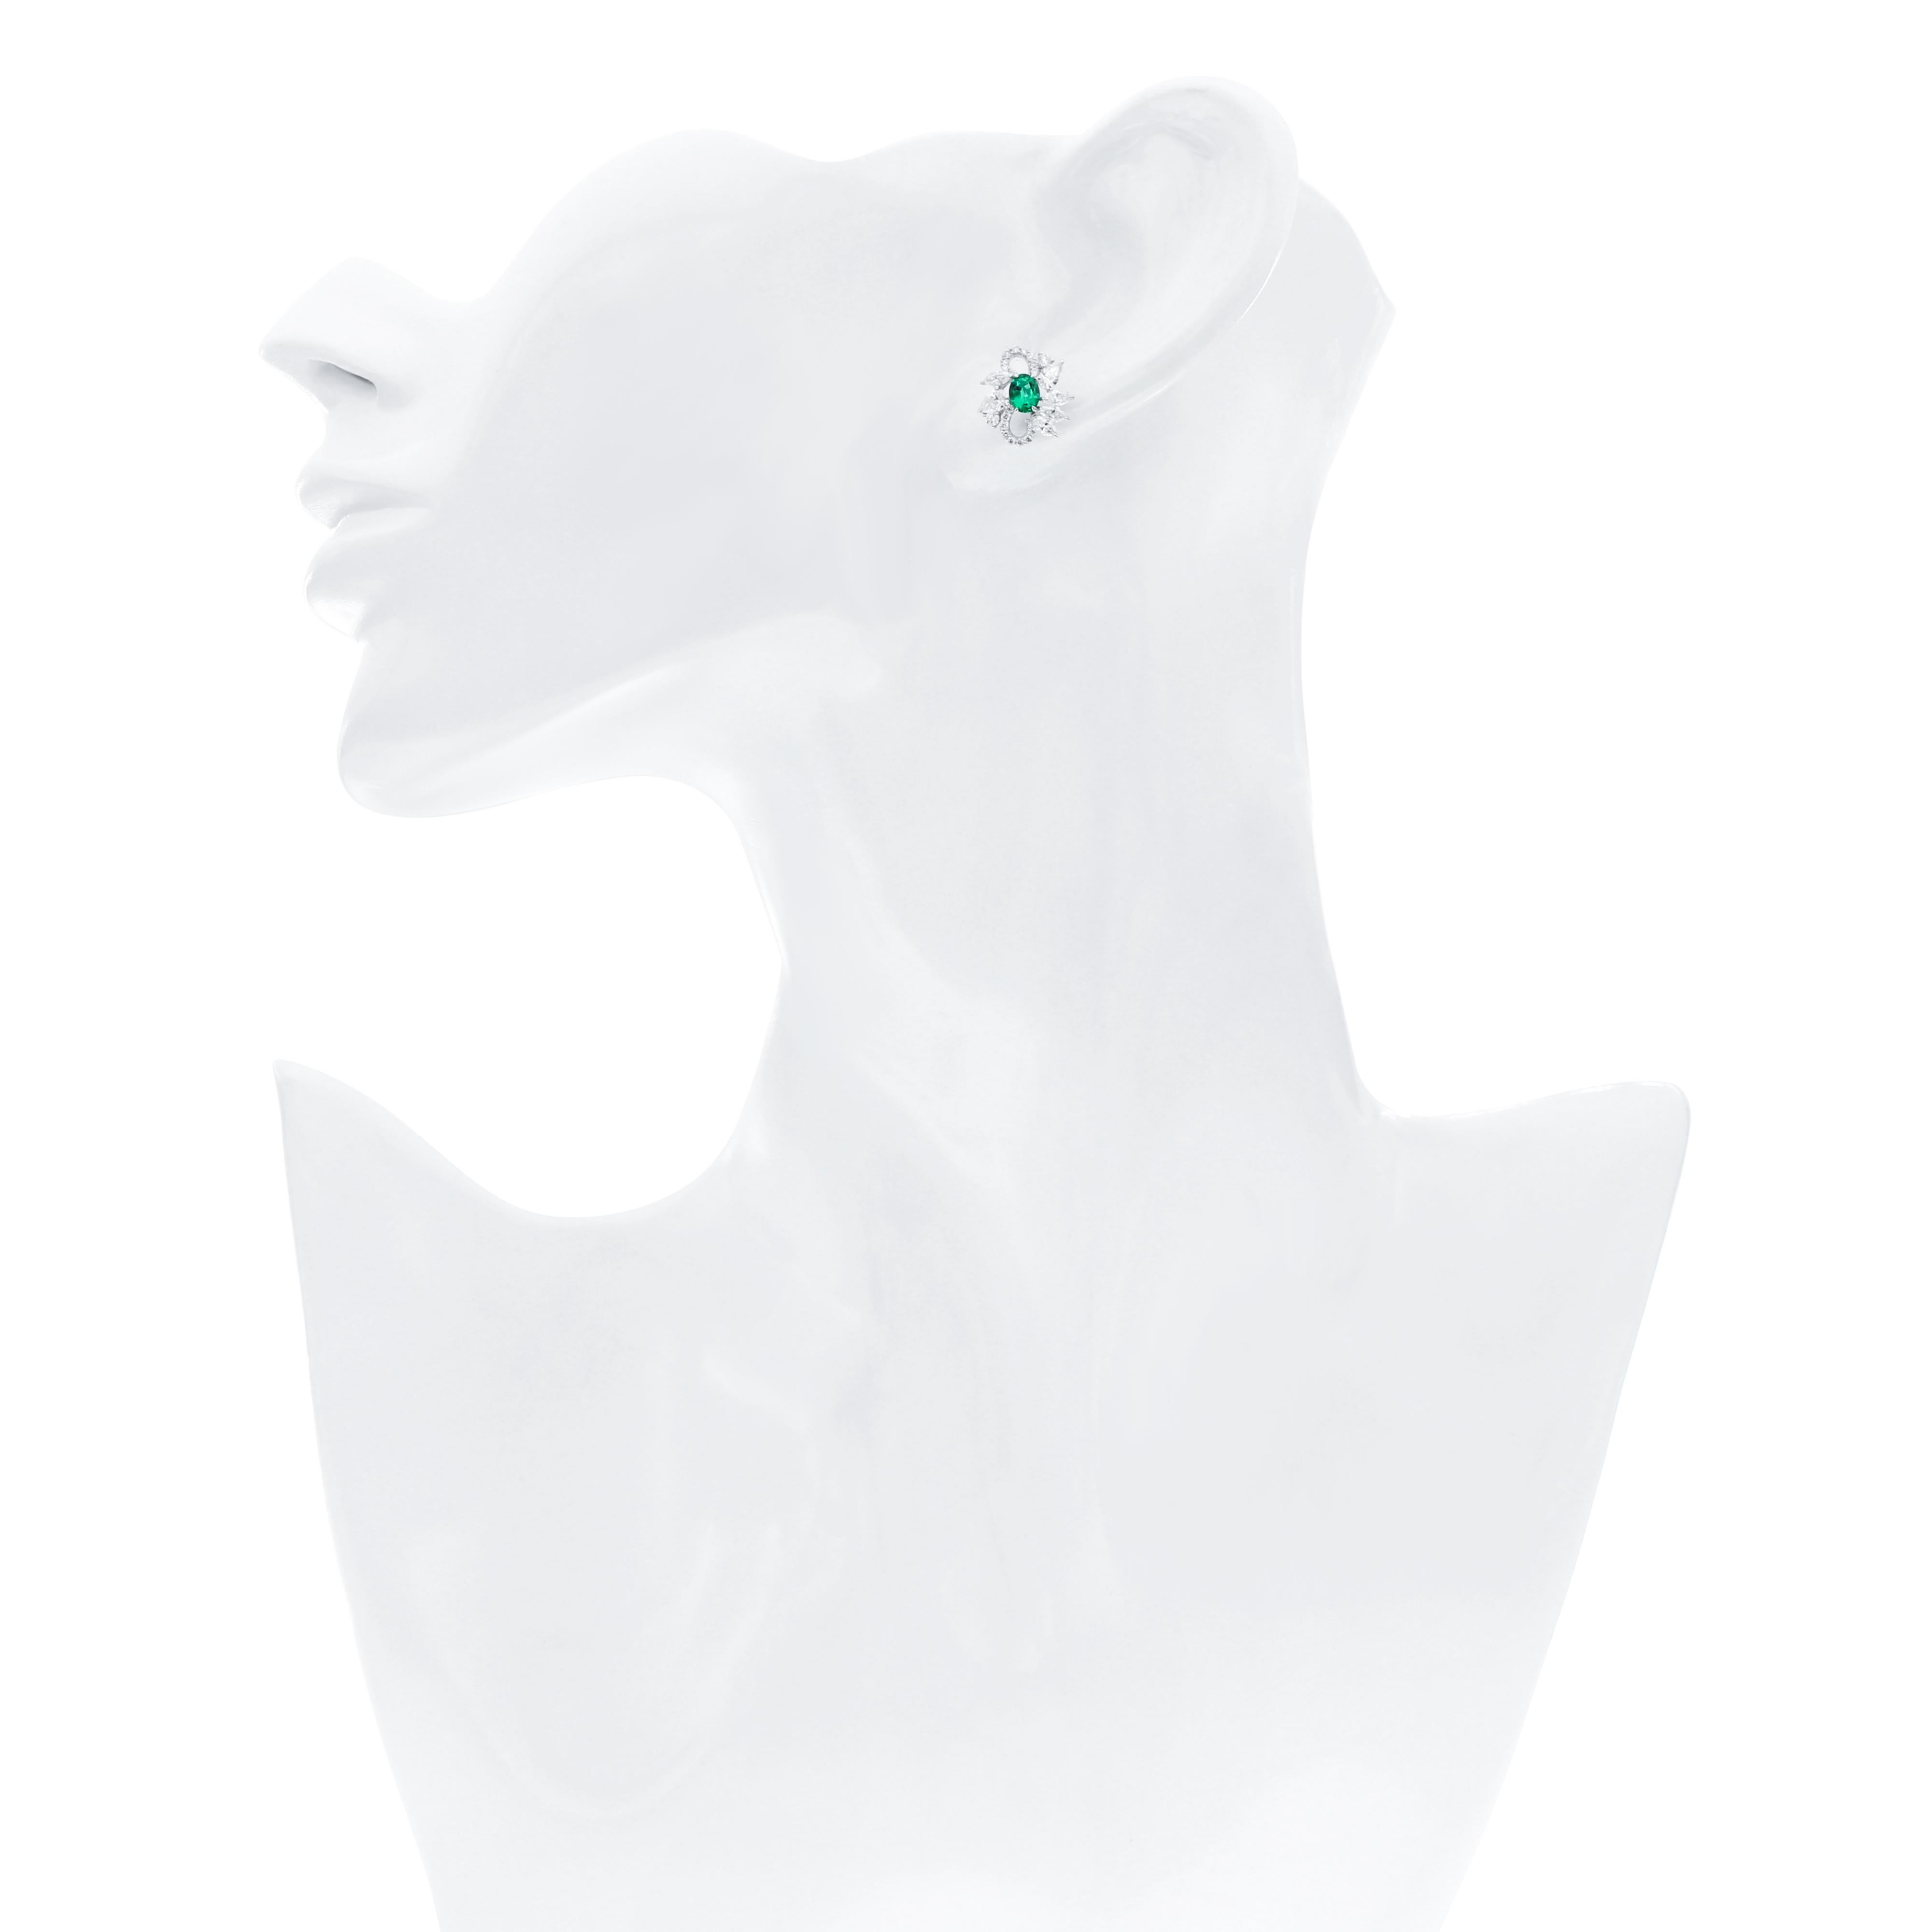 Emerald and Diamond Studded Earring in 18 Karat White Gold handcraft Earring For Sale 1